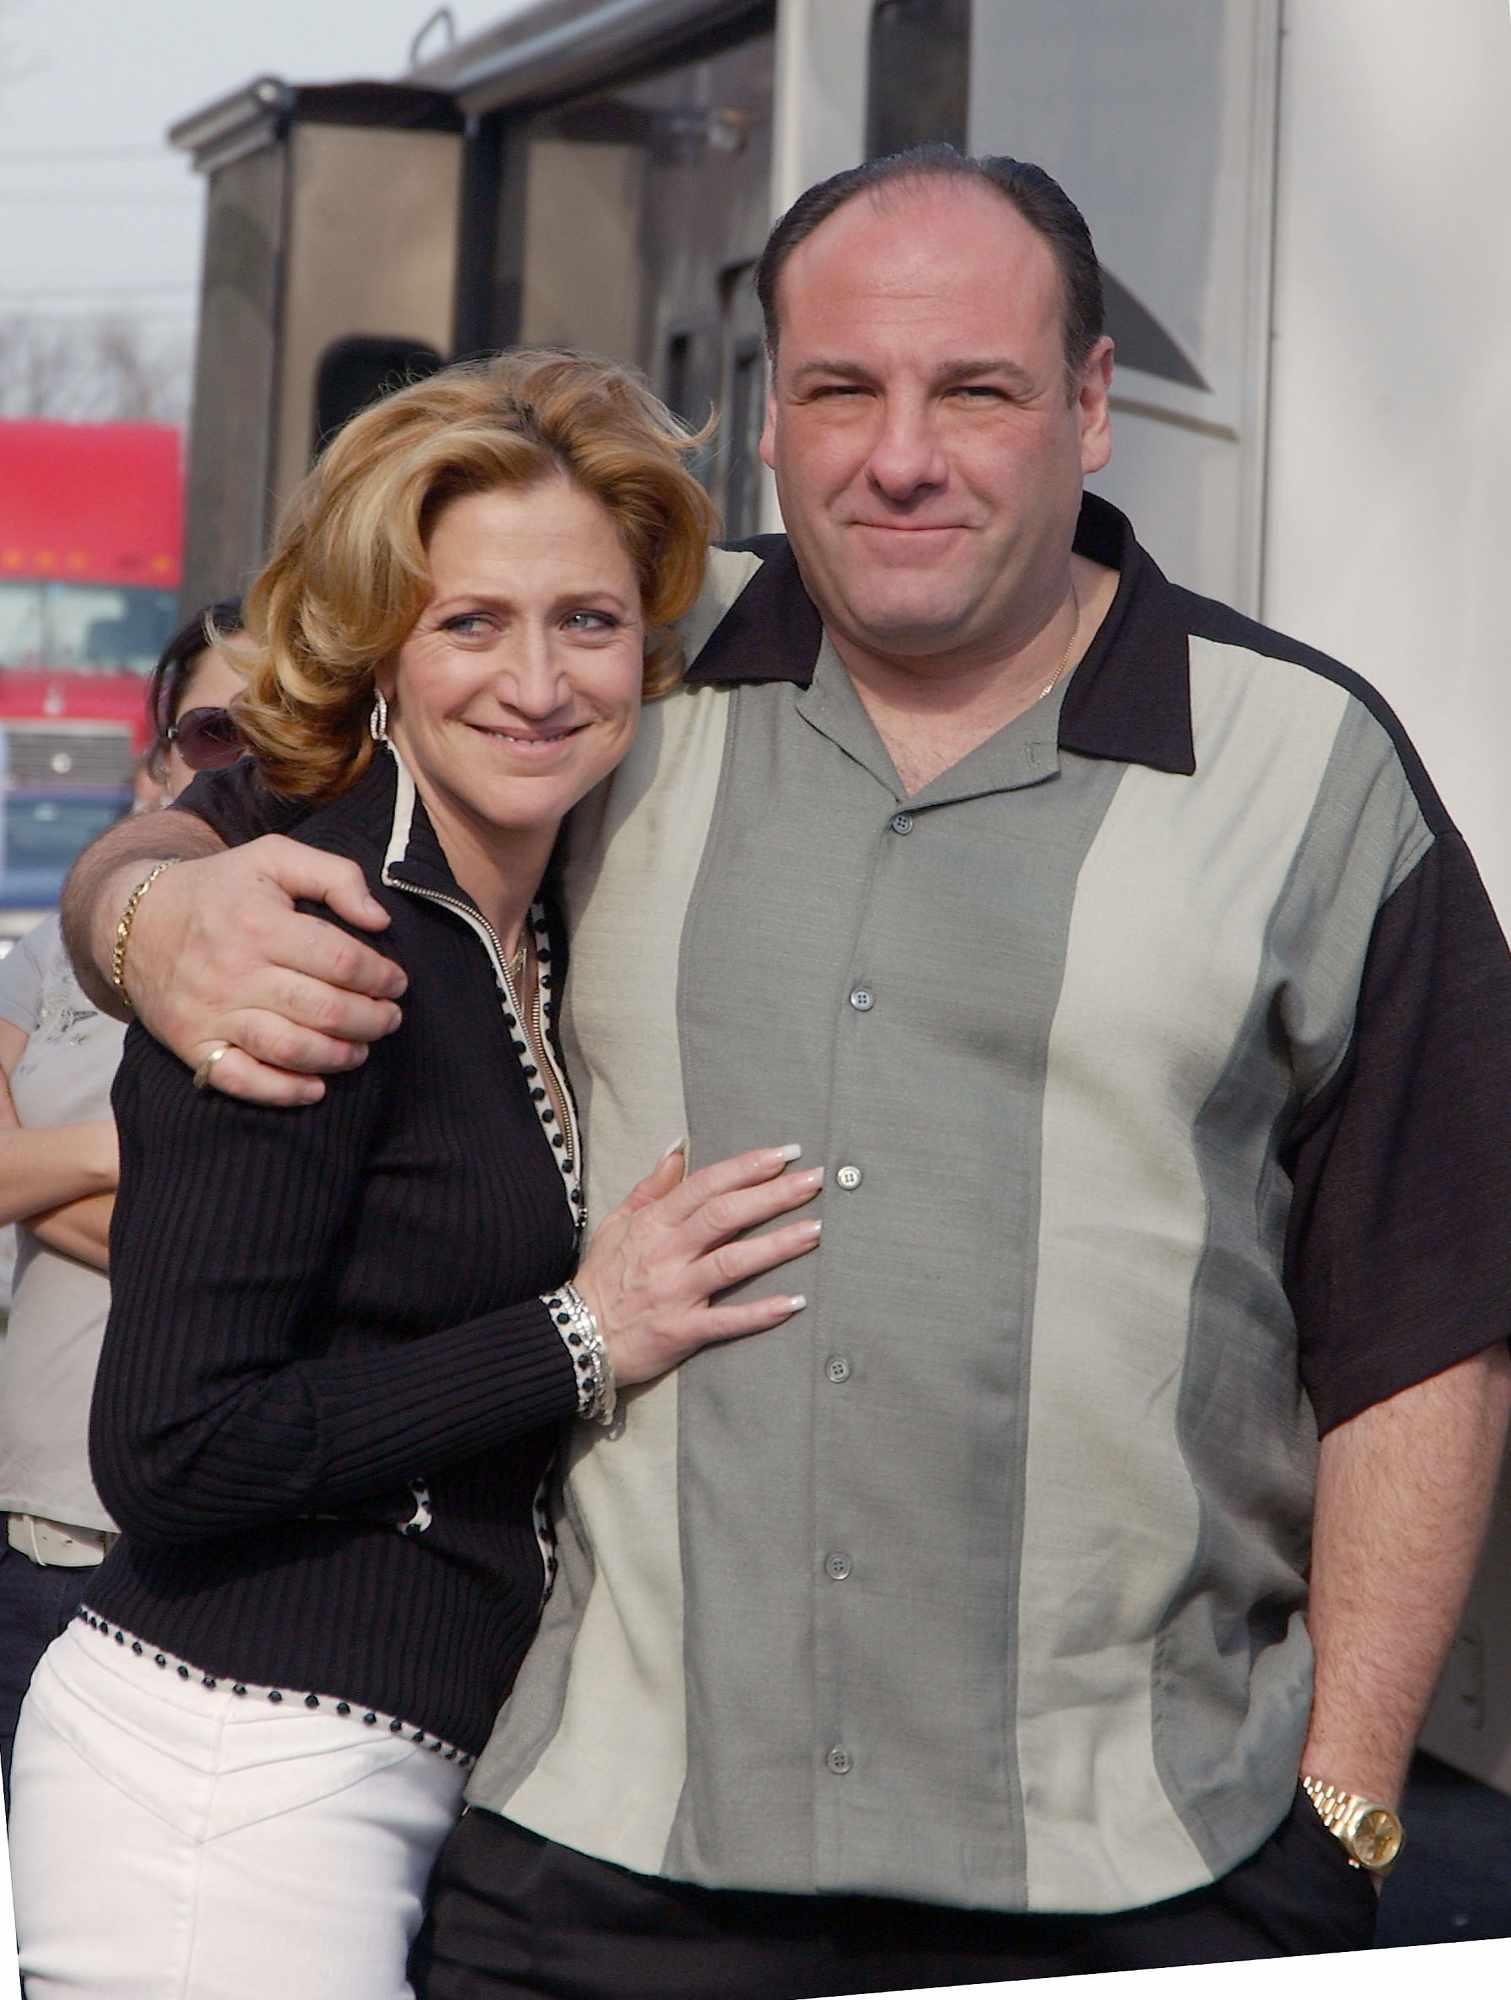 Carmela Soprano, one of the inspirations of TikTok's "Mob Wife" aesthetic, in a scene with Tony Soprano